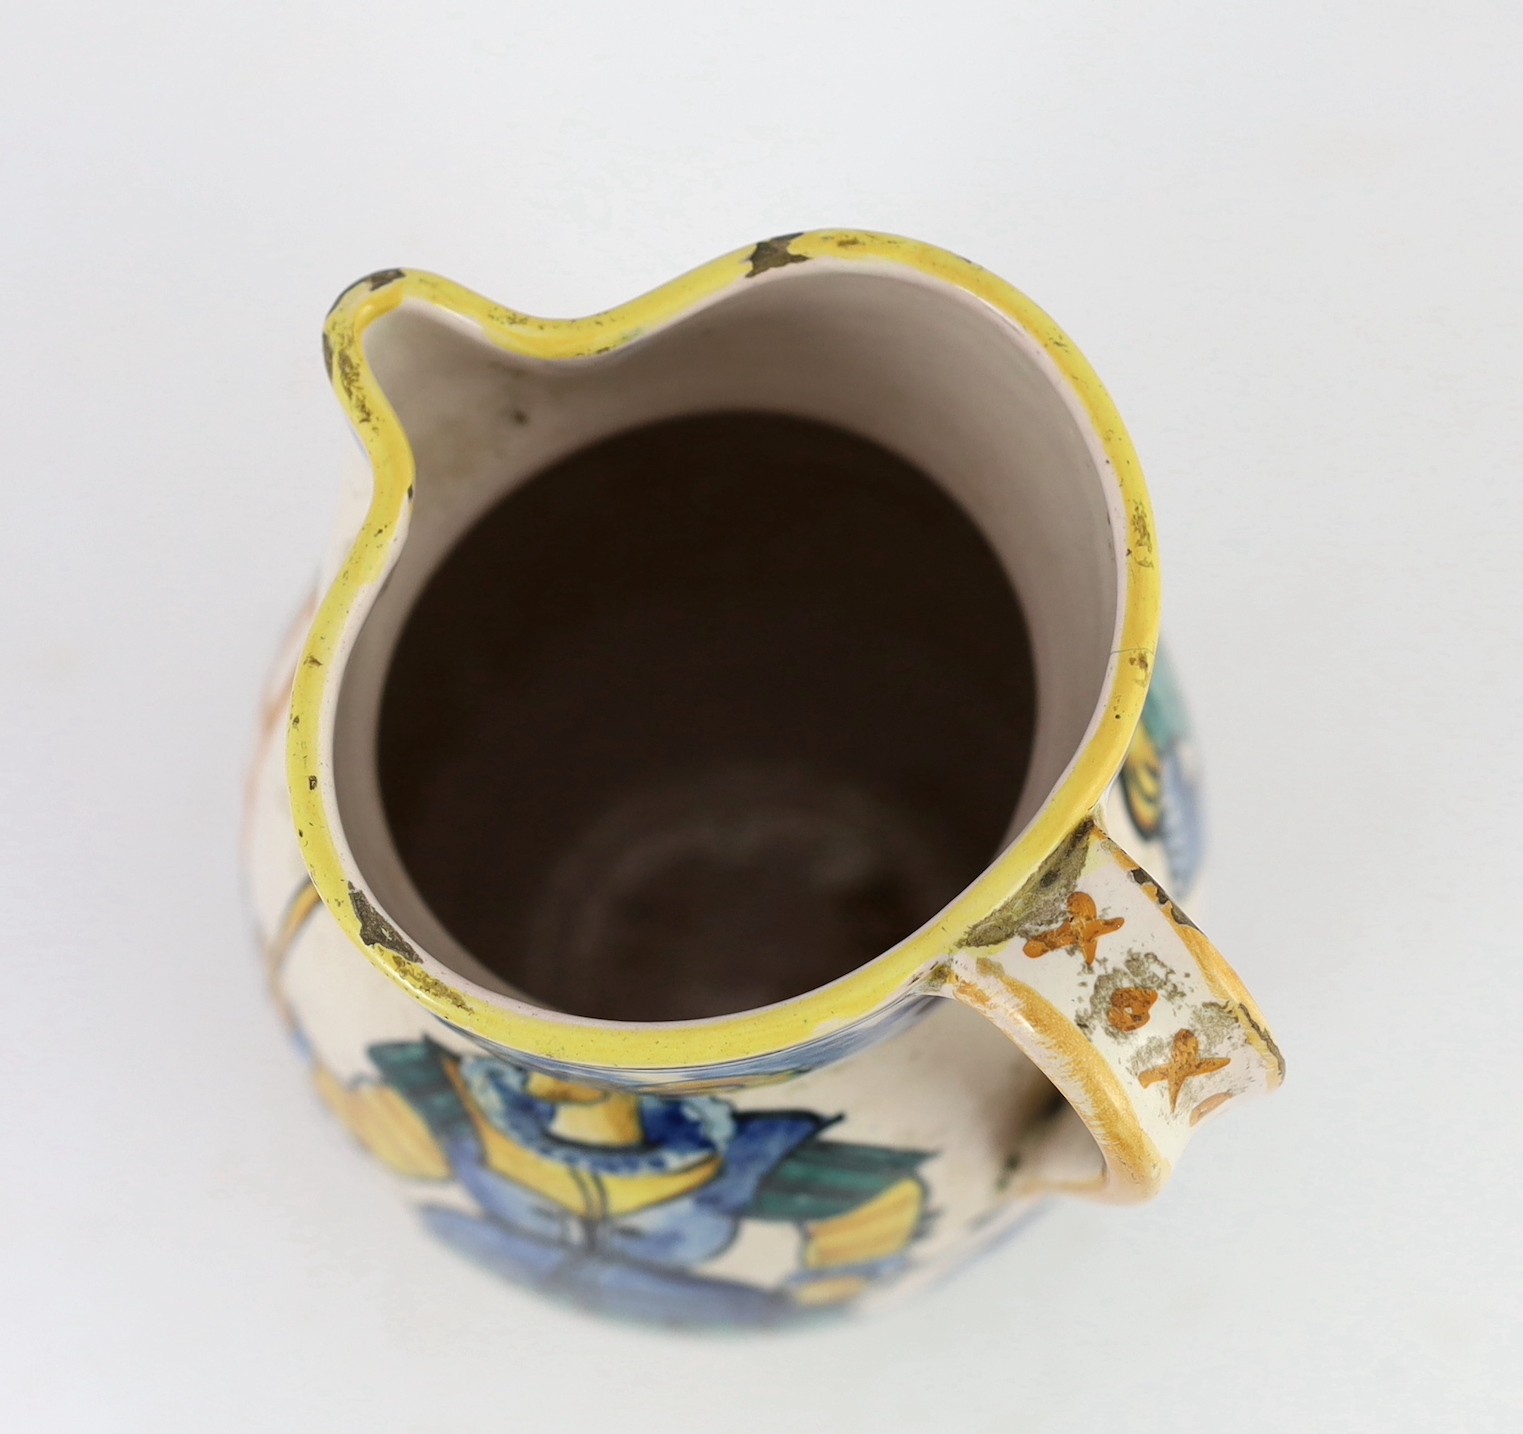 An Italian maiolica jug (boccale), probably Montelupo, 18th/19th century, 24.5cm high, minor damage